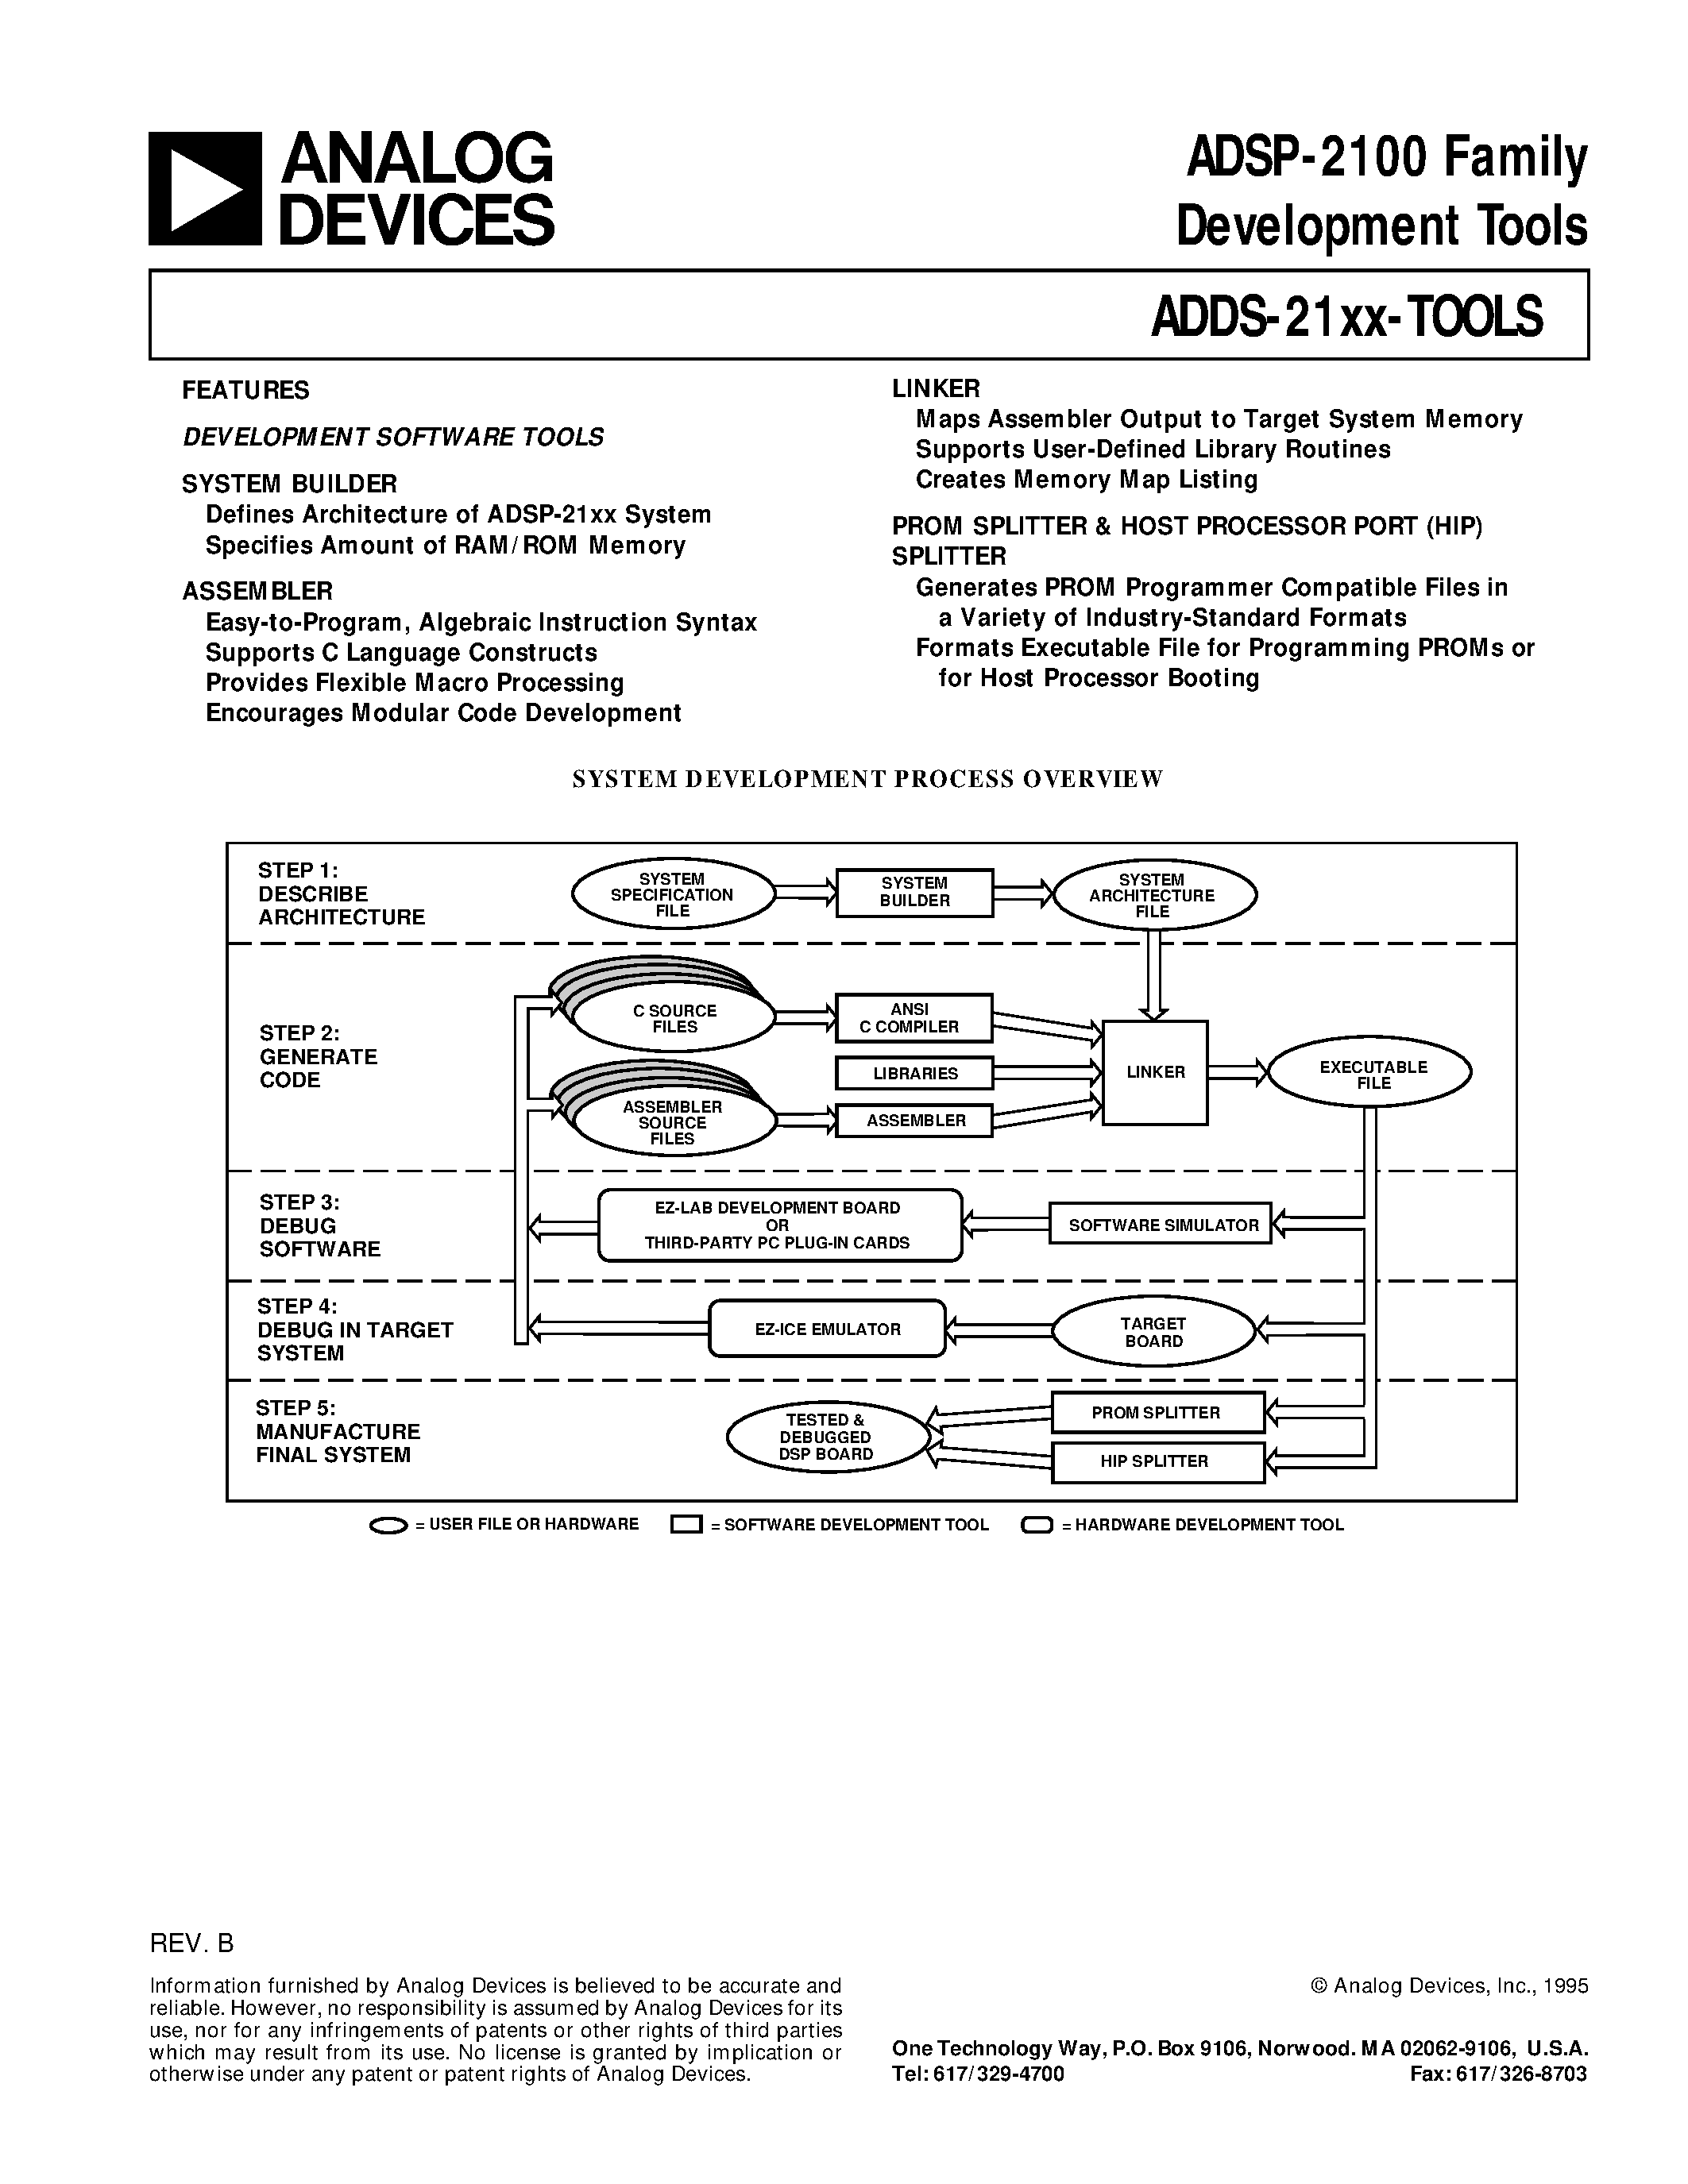 Даташит ADDS-2111-EZ-ICE - ADSP-2100 Family Development Tools страница 1